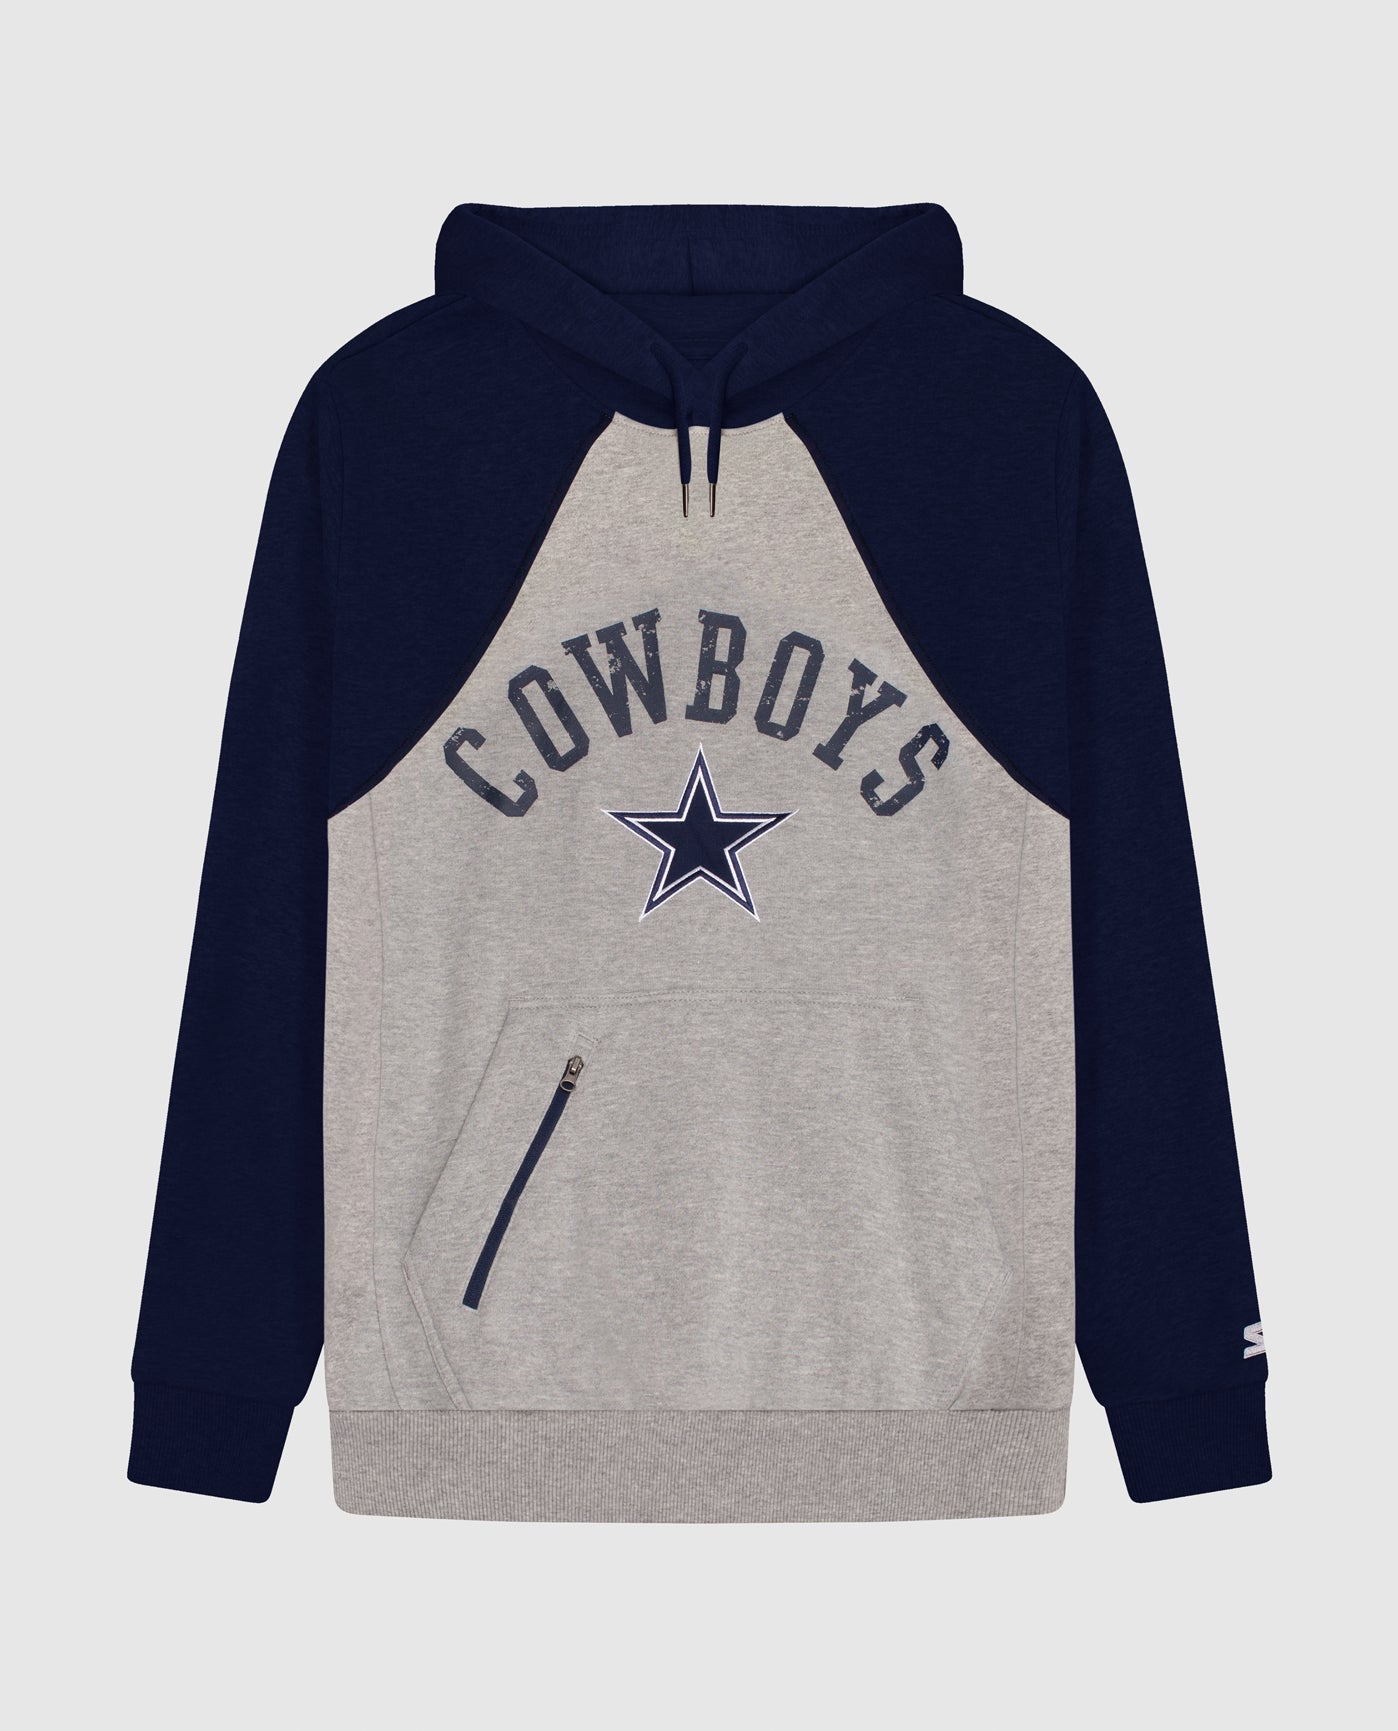 Dallas Cowboys Sweatshirts, Cowboys Hoodies